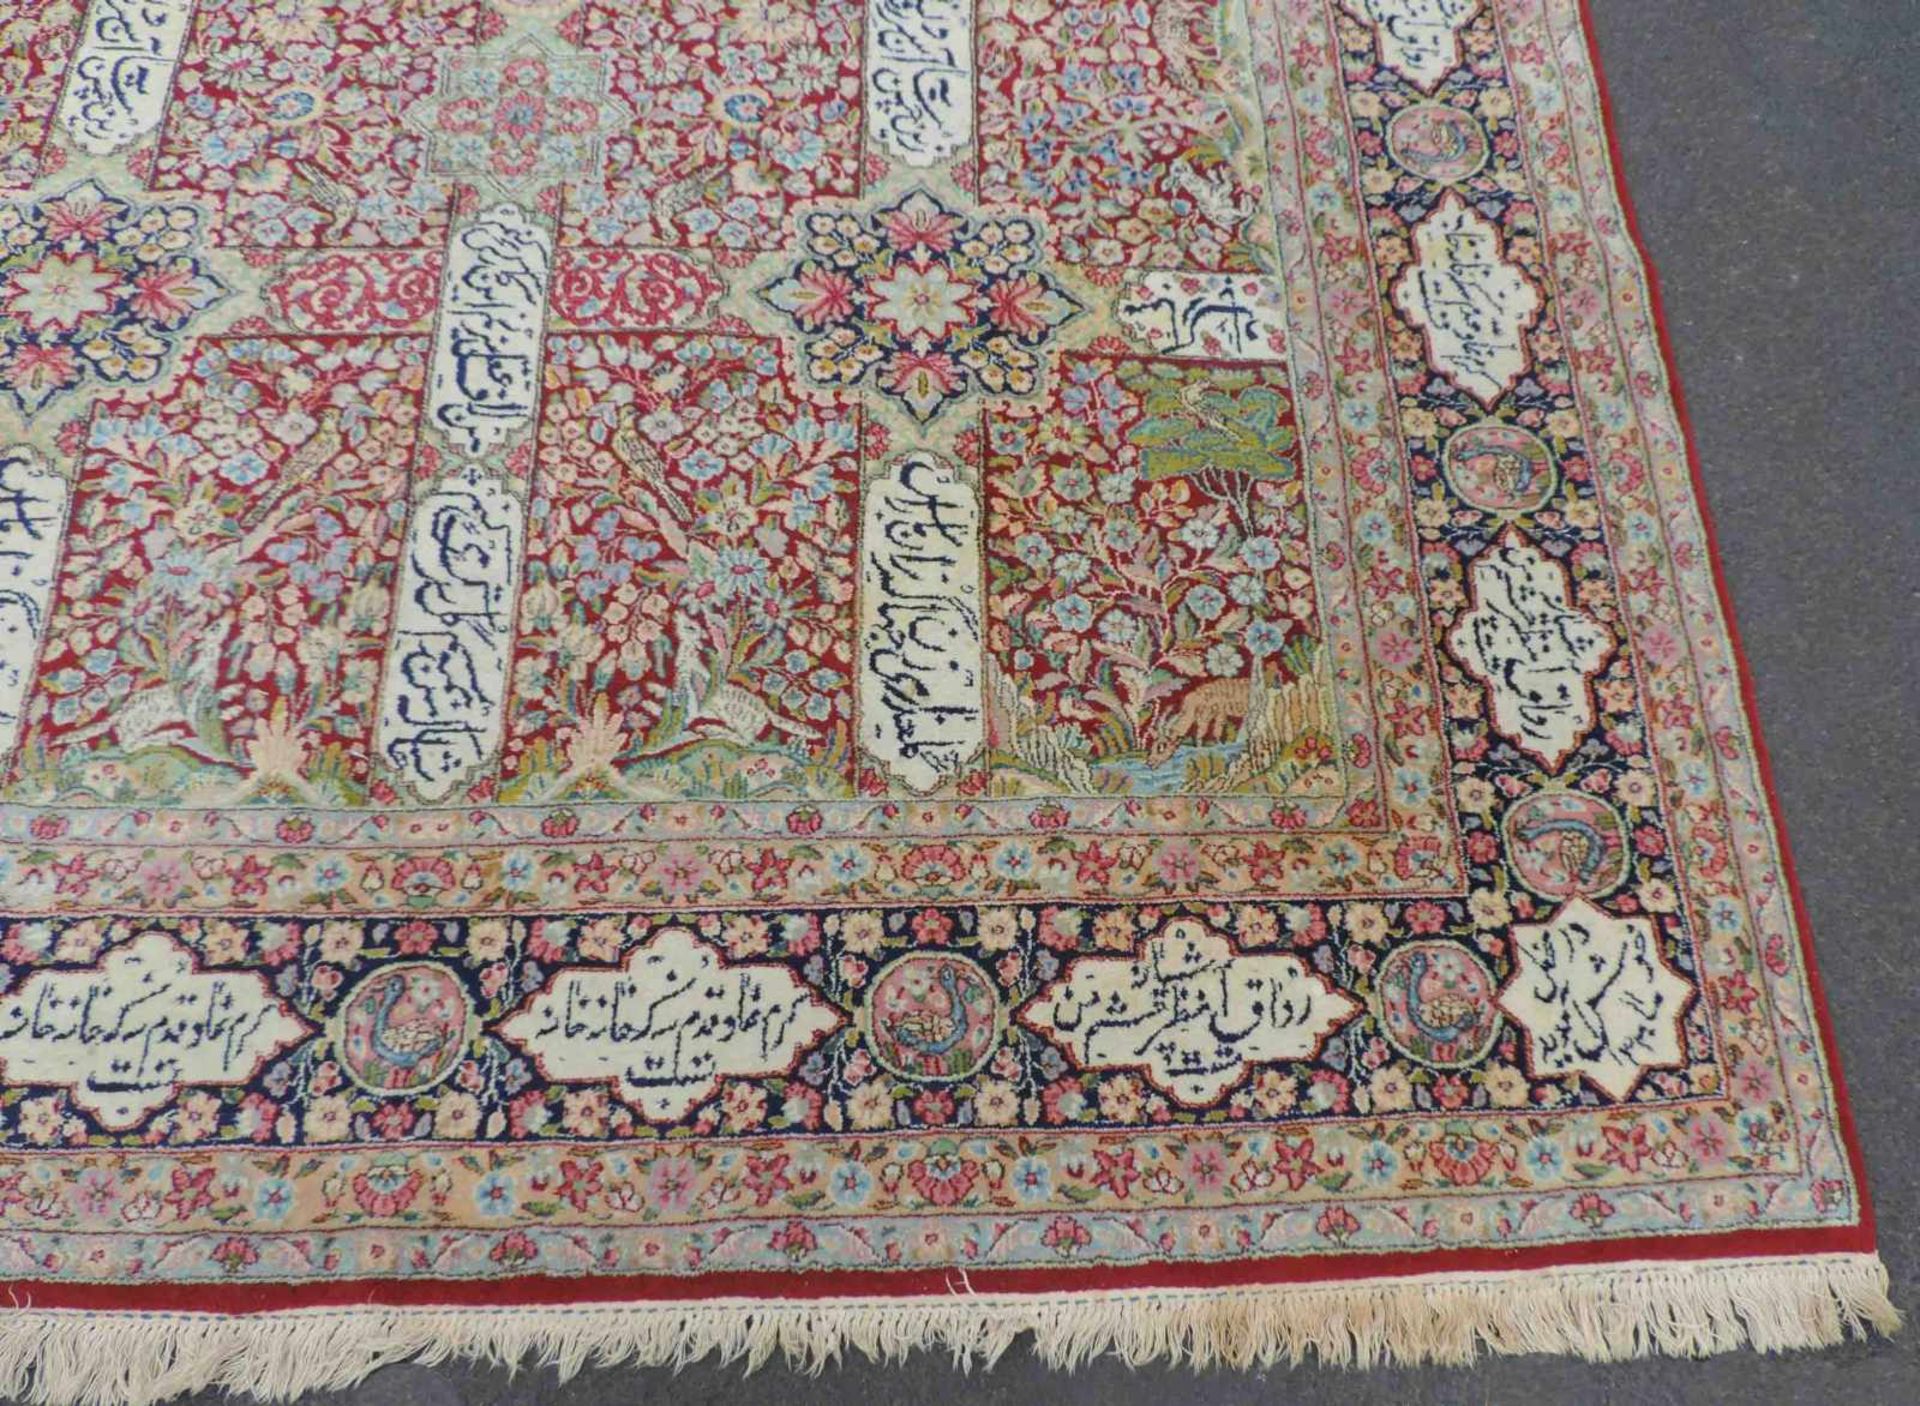 Kirman Garten - Teppich. Iran. Feine Knüpfung. Datiert 1390 (1972). 342 cm x 248 cm. Handgeknüpft. - Bild 3 aus 8